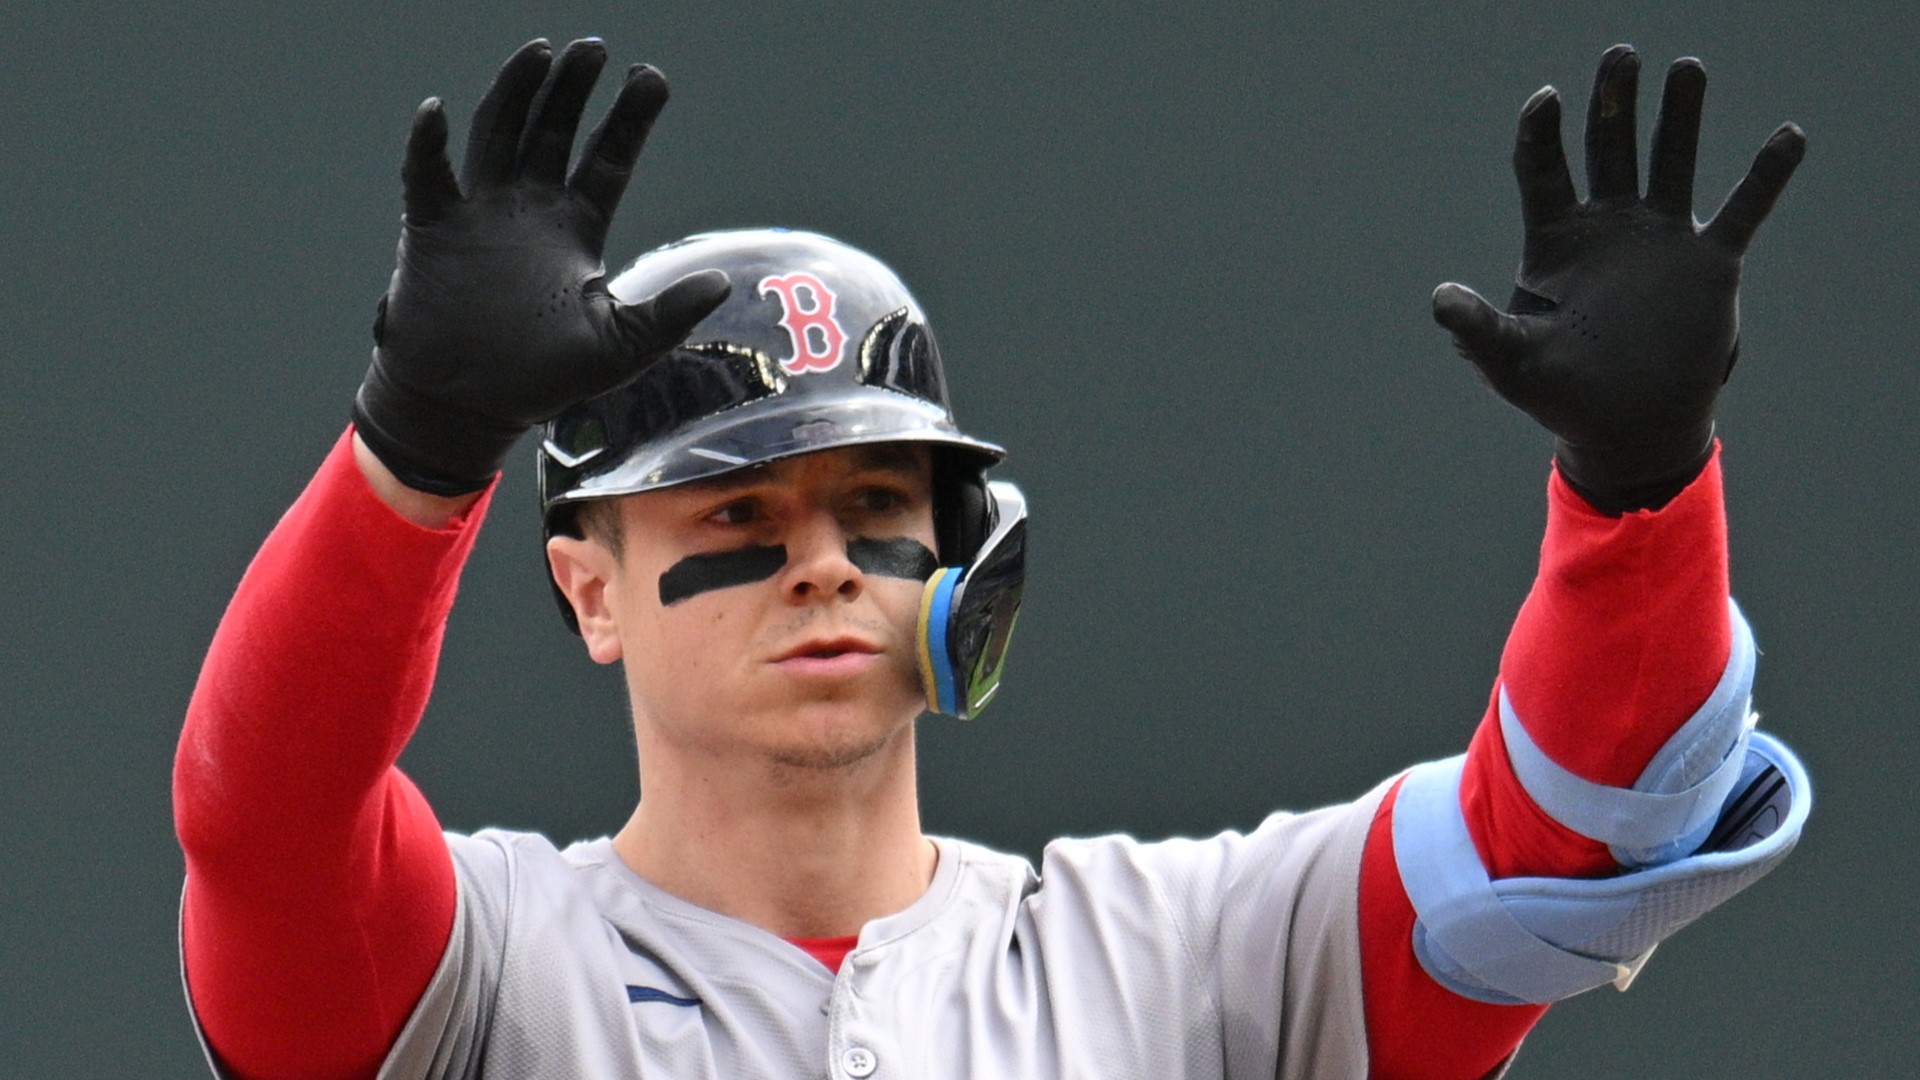 Red Sox Notes: Boston Seeking Offensive Turnaround Amid Slump